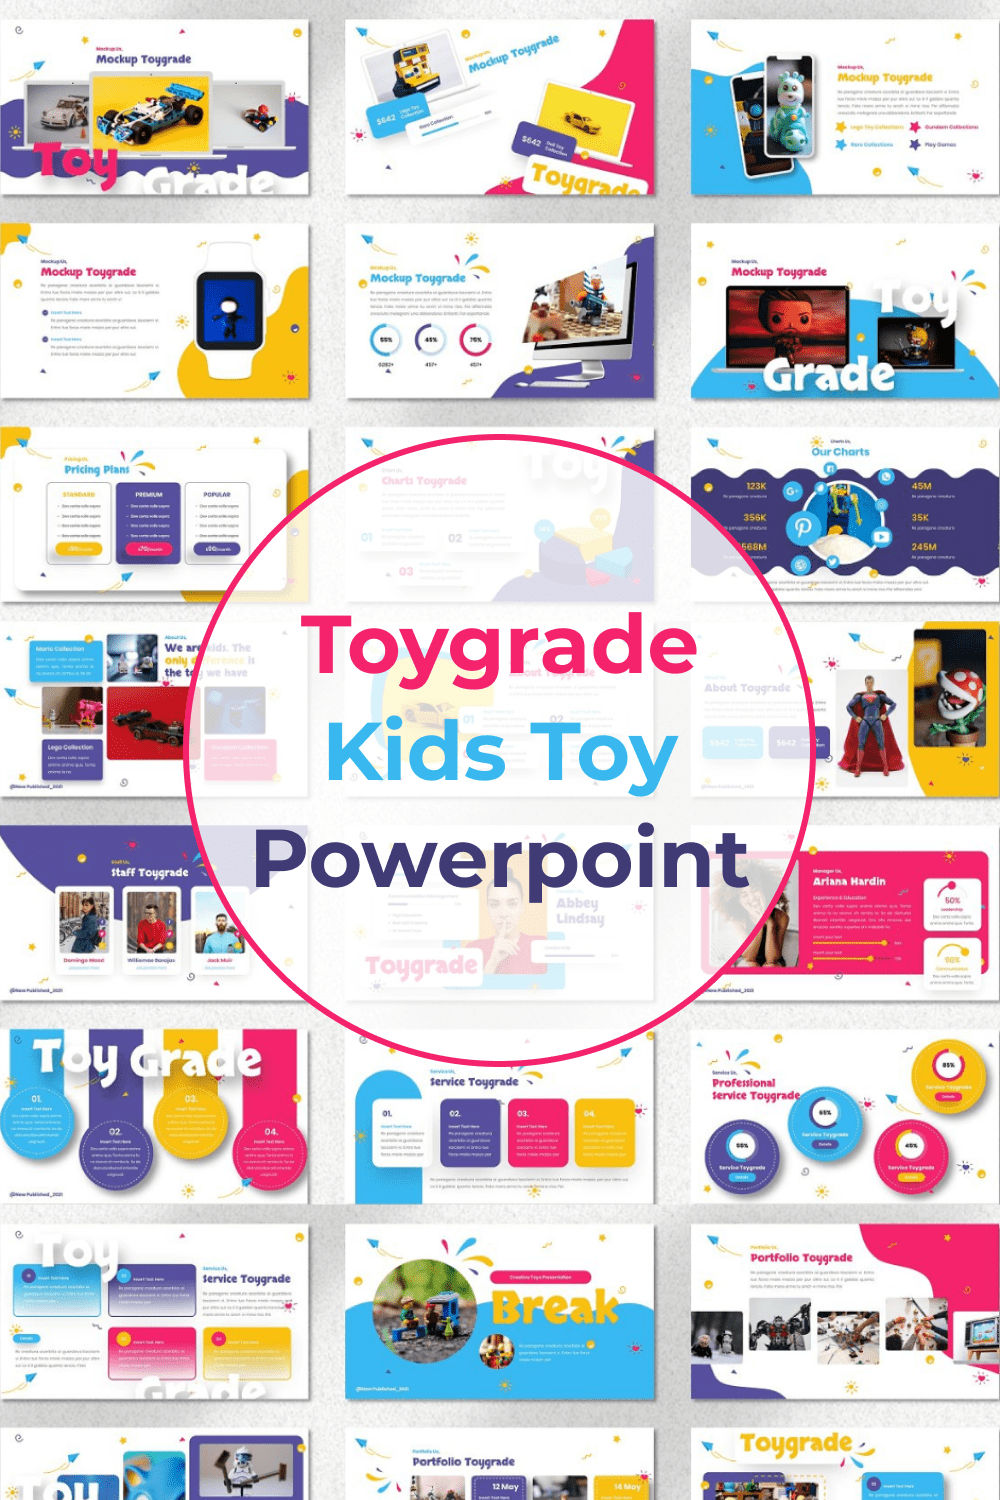 Toygrade - Kids Toy Powerpoint Pinterest.